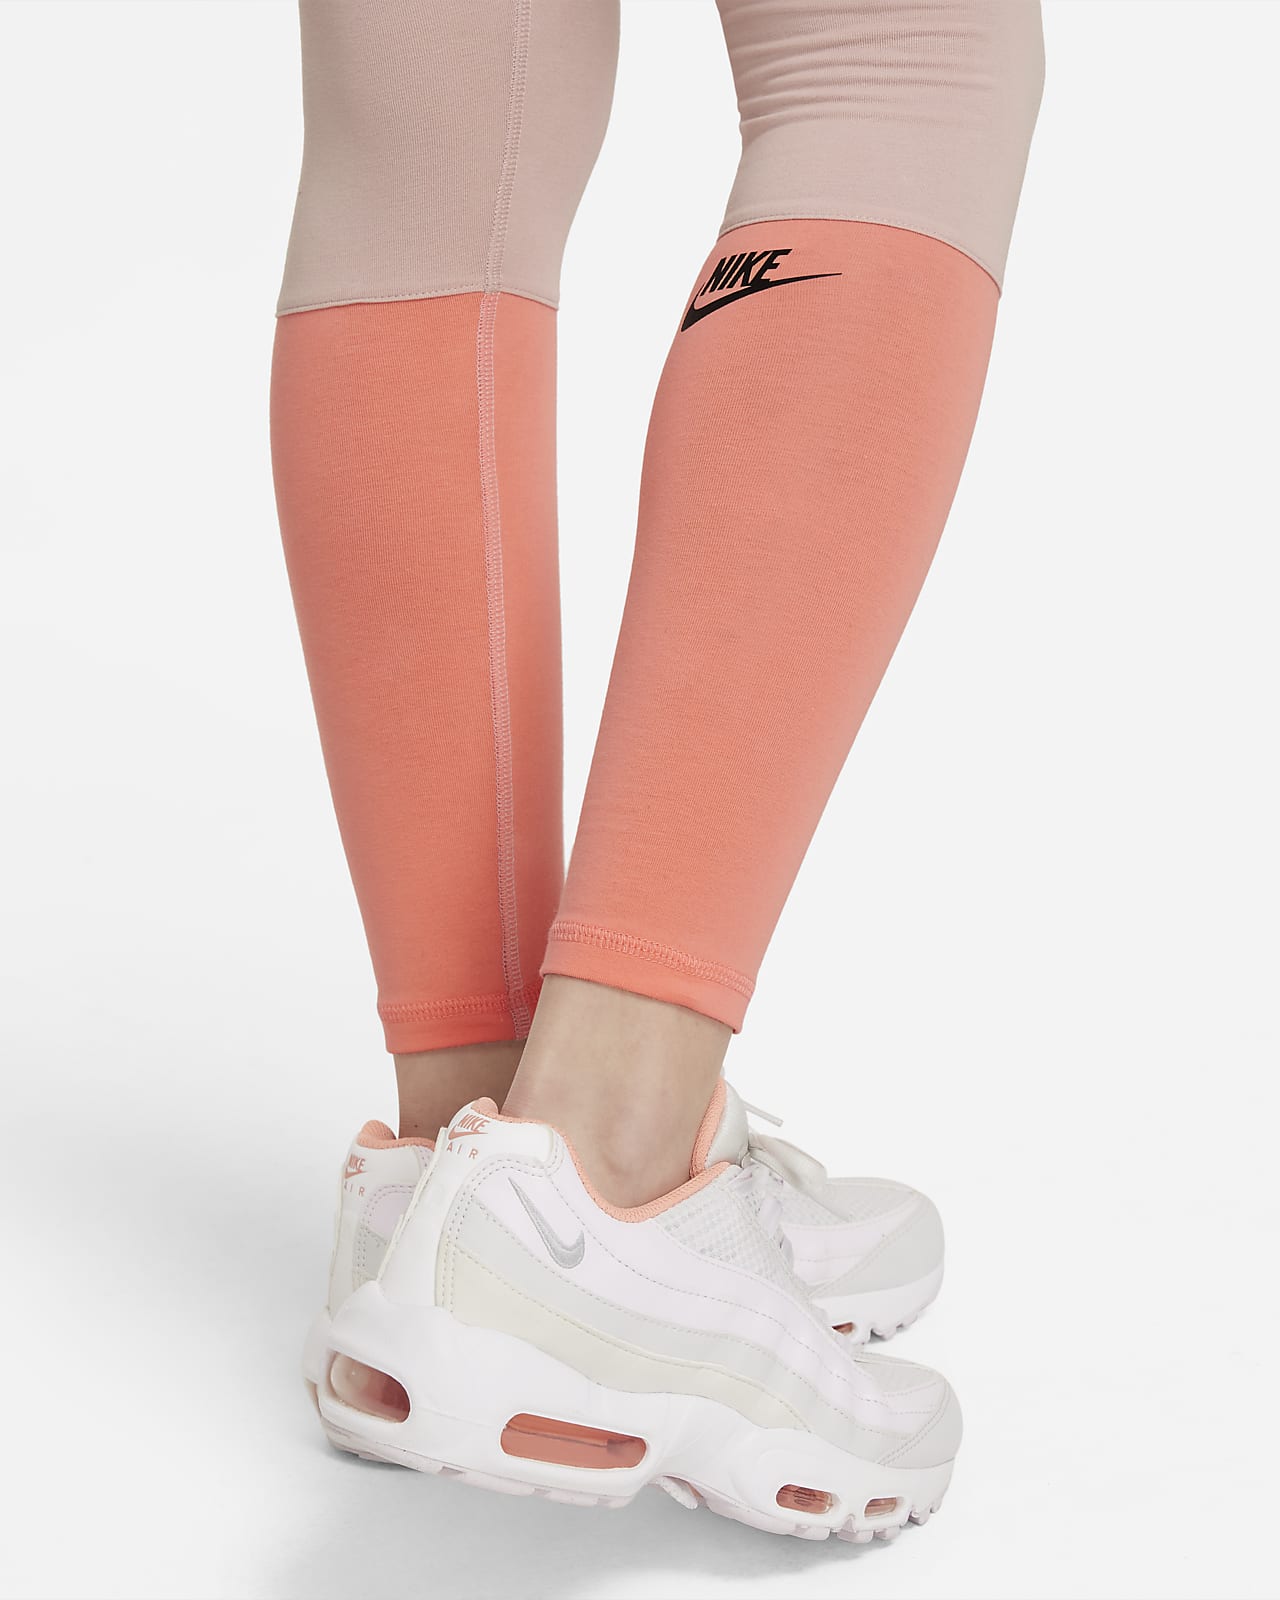 Nike Sportswear Favorites Leggings de talle alto para - Niña. Nike